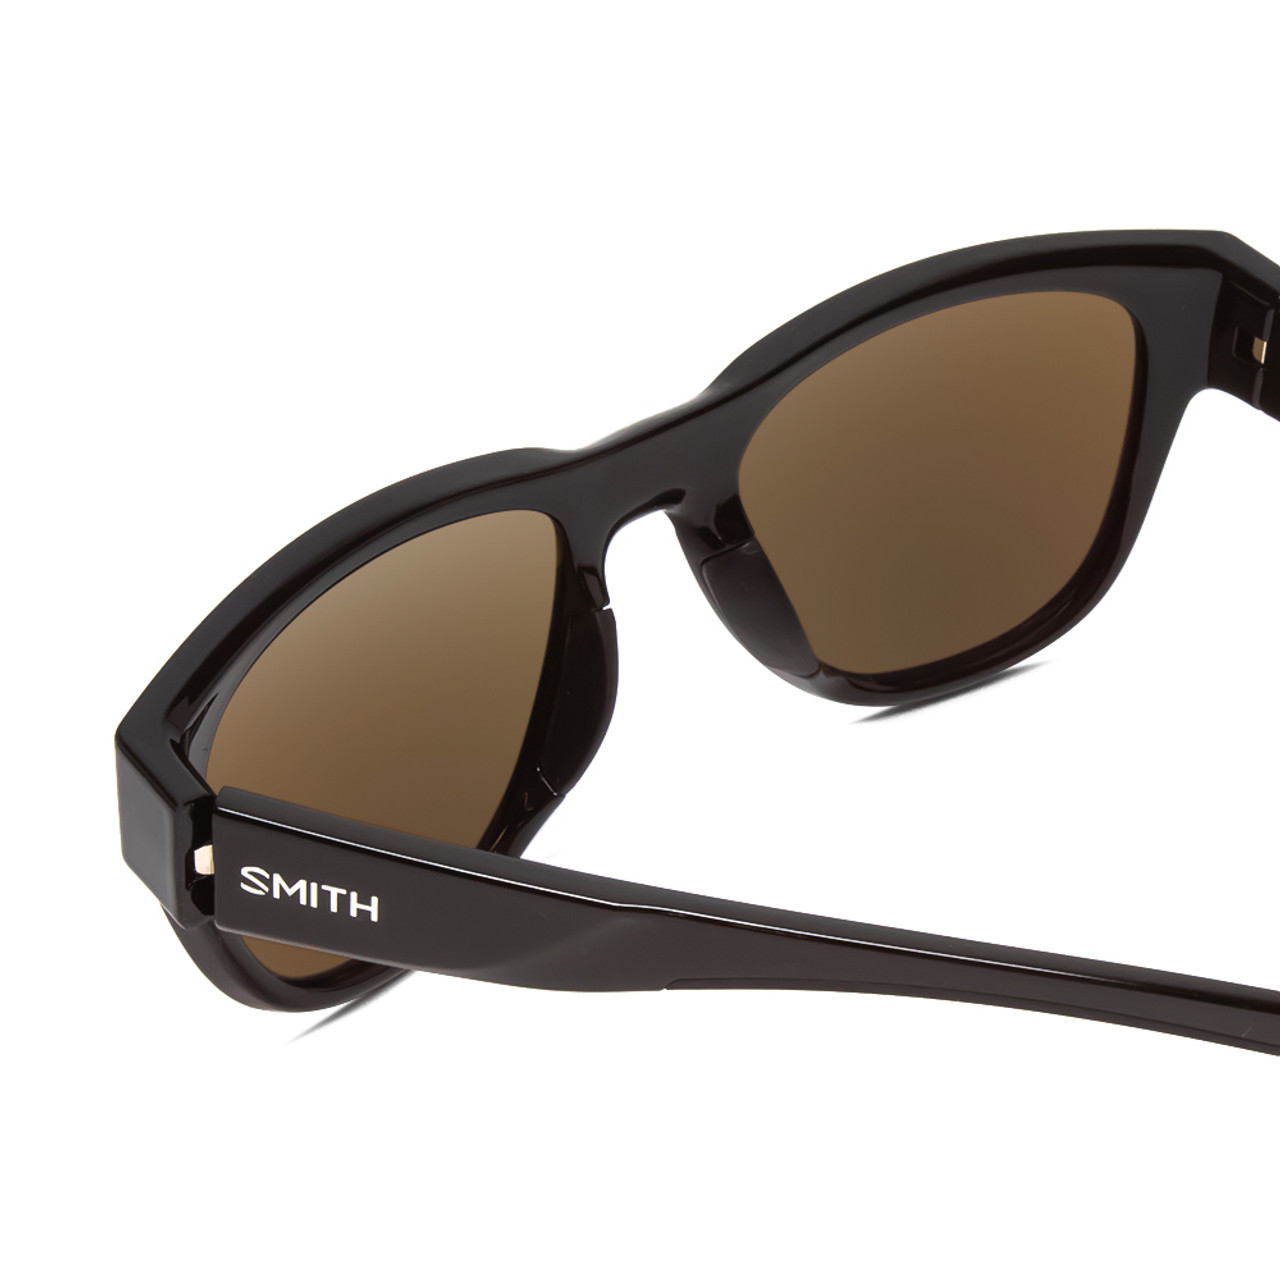 Close Up View of Smith Rockaway Women Cateye Sunglasses Black/ChromaPop Polarized Gray Green 52mm